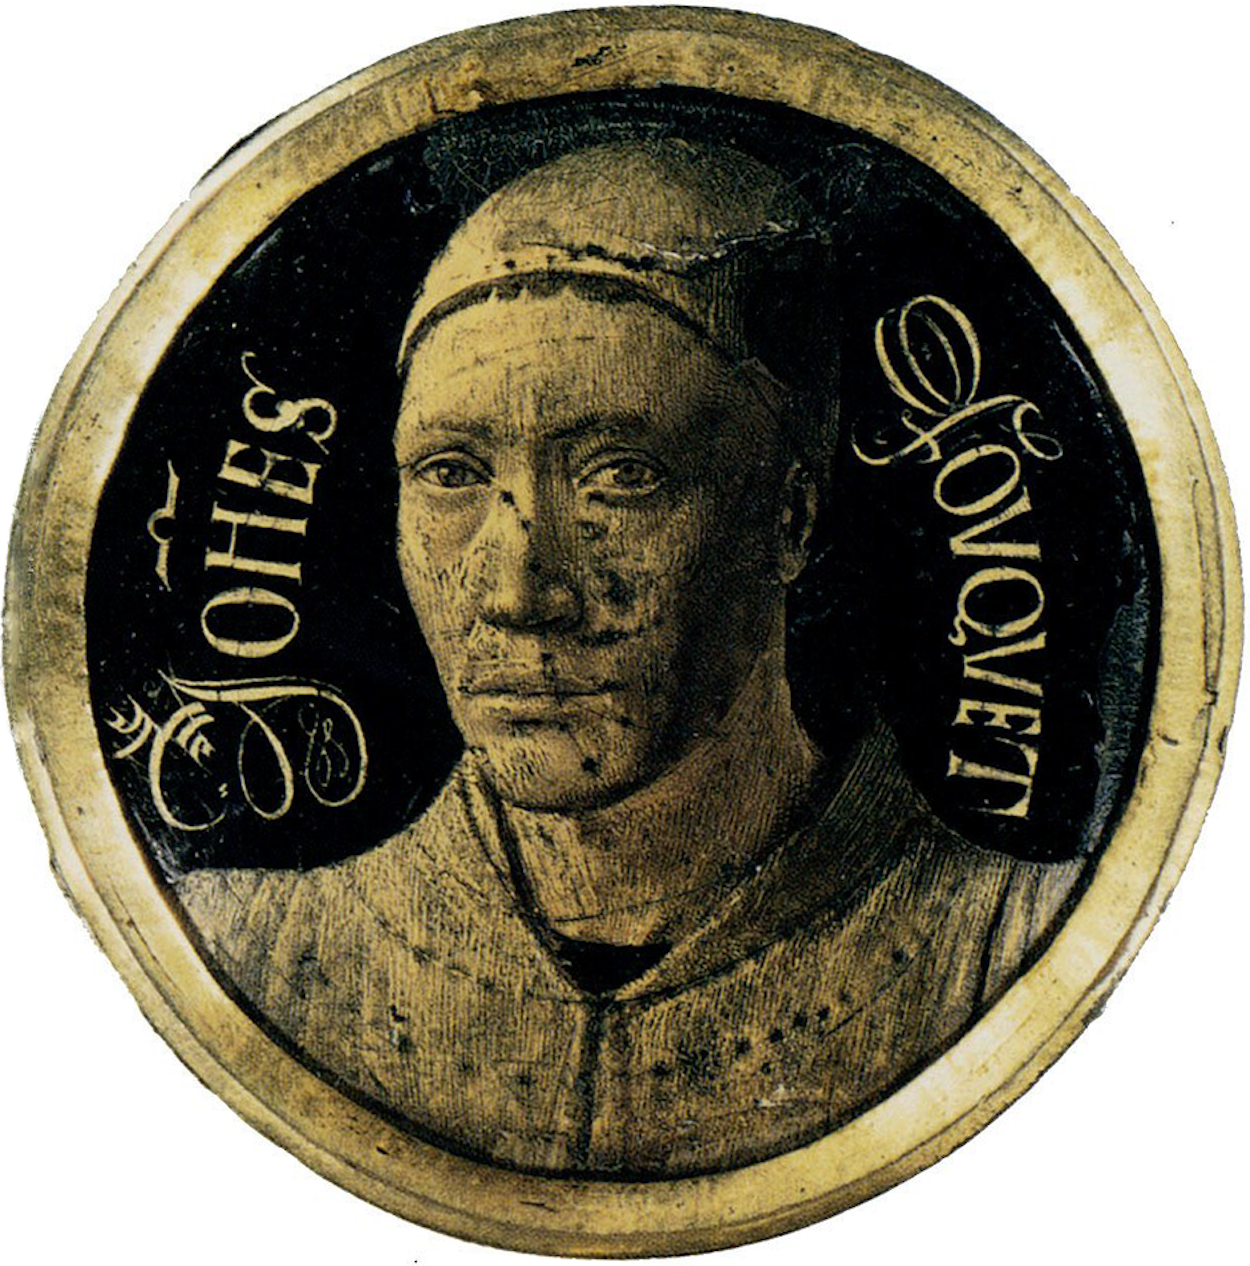 Jean Fouquet - Approximately 1420 - 1481